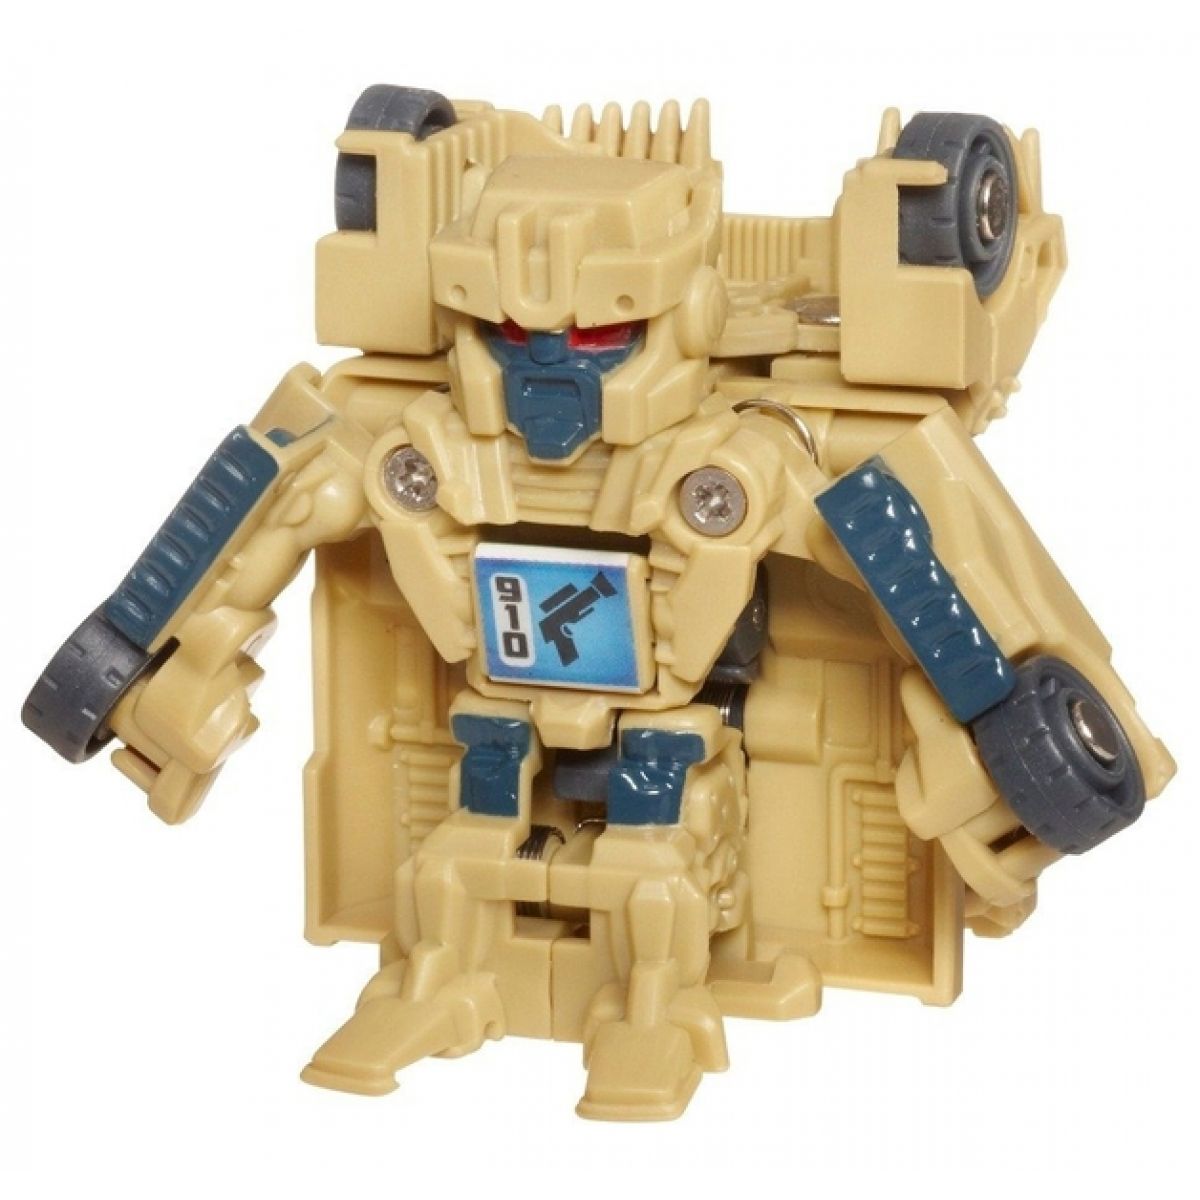 Transformers BOT SHOTS Hasbro - Decepticon Brawl